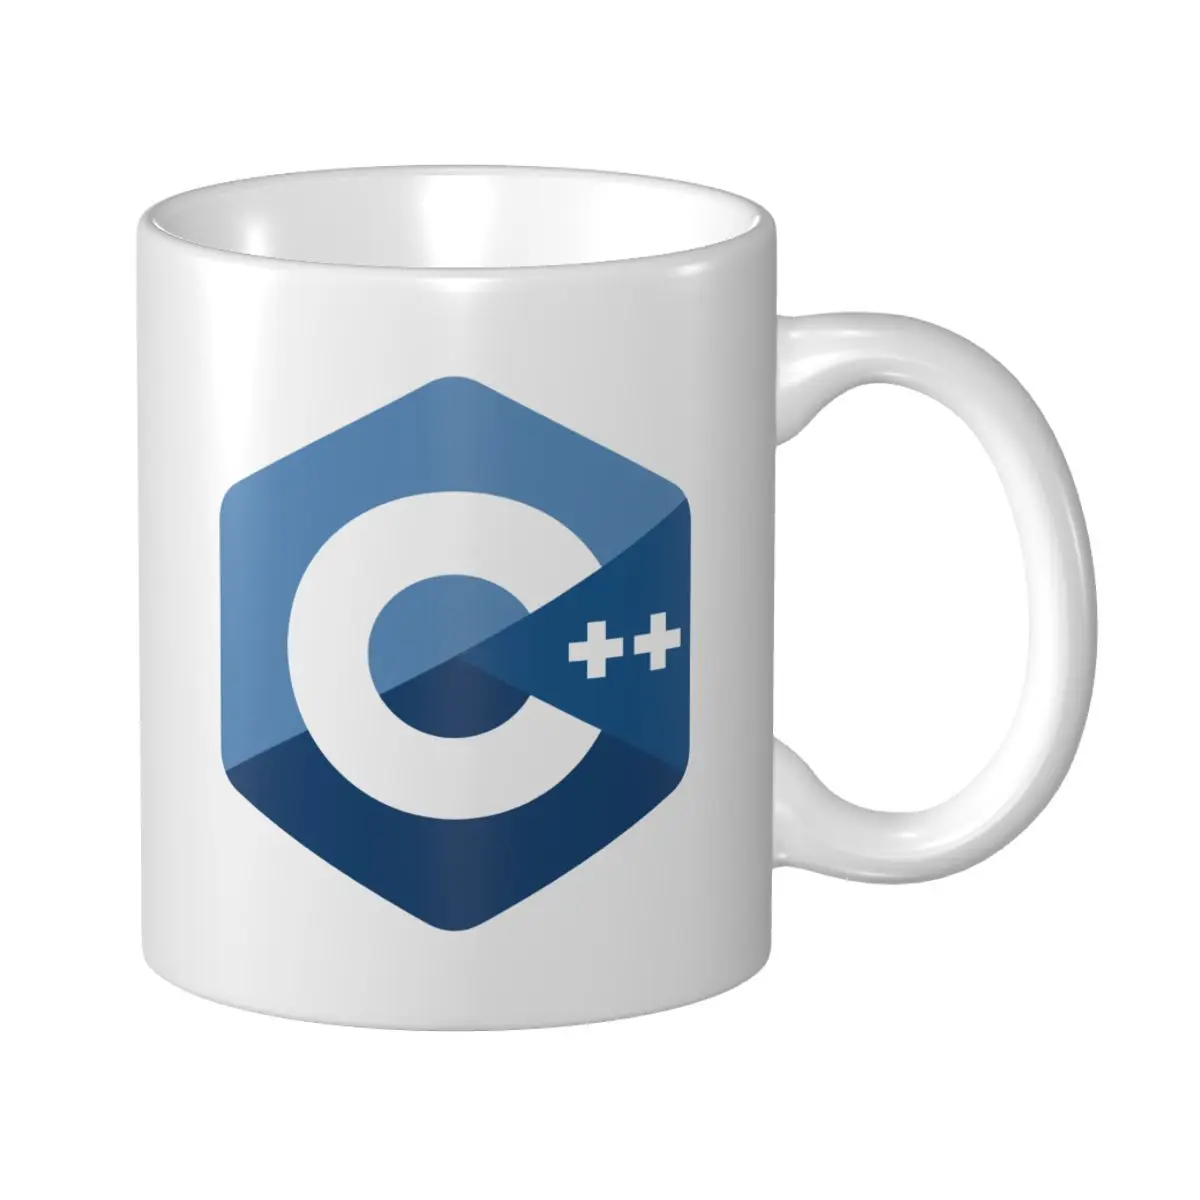 

C++ Coffe Mug Solid color Mugs Personality Ceramic Mugs Eco Friendly Tea Cup 330ml (11oz)